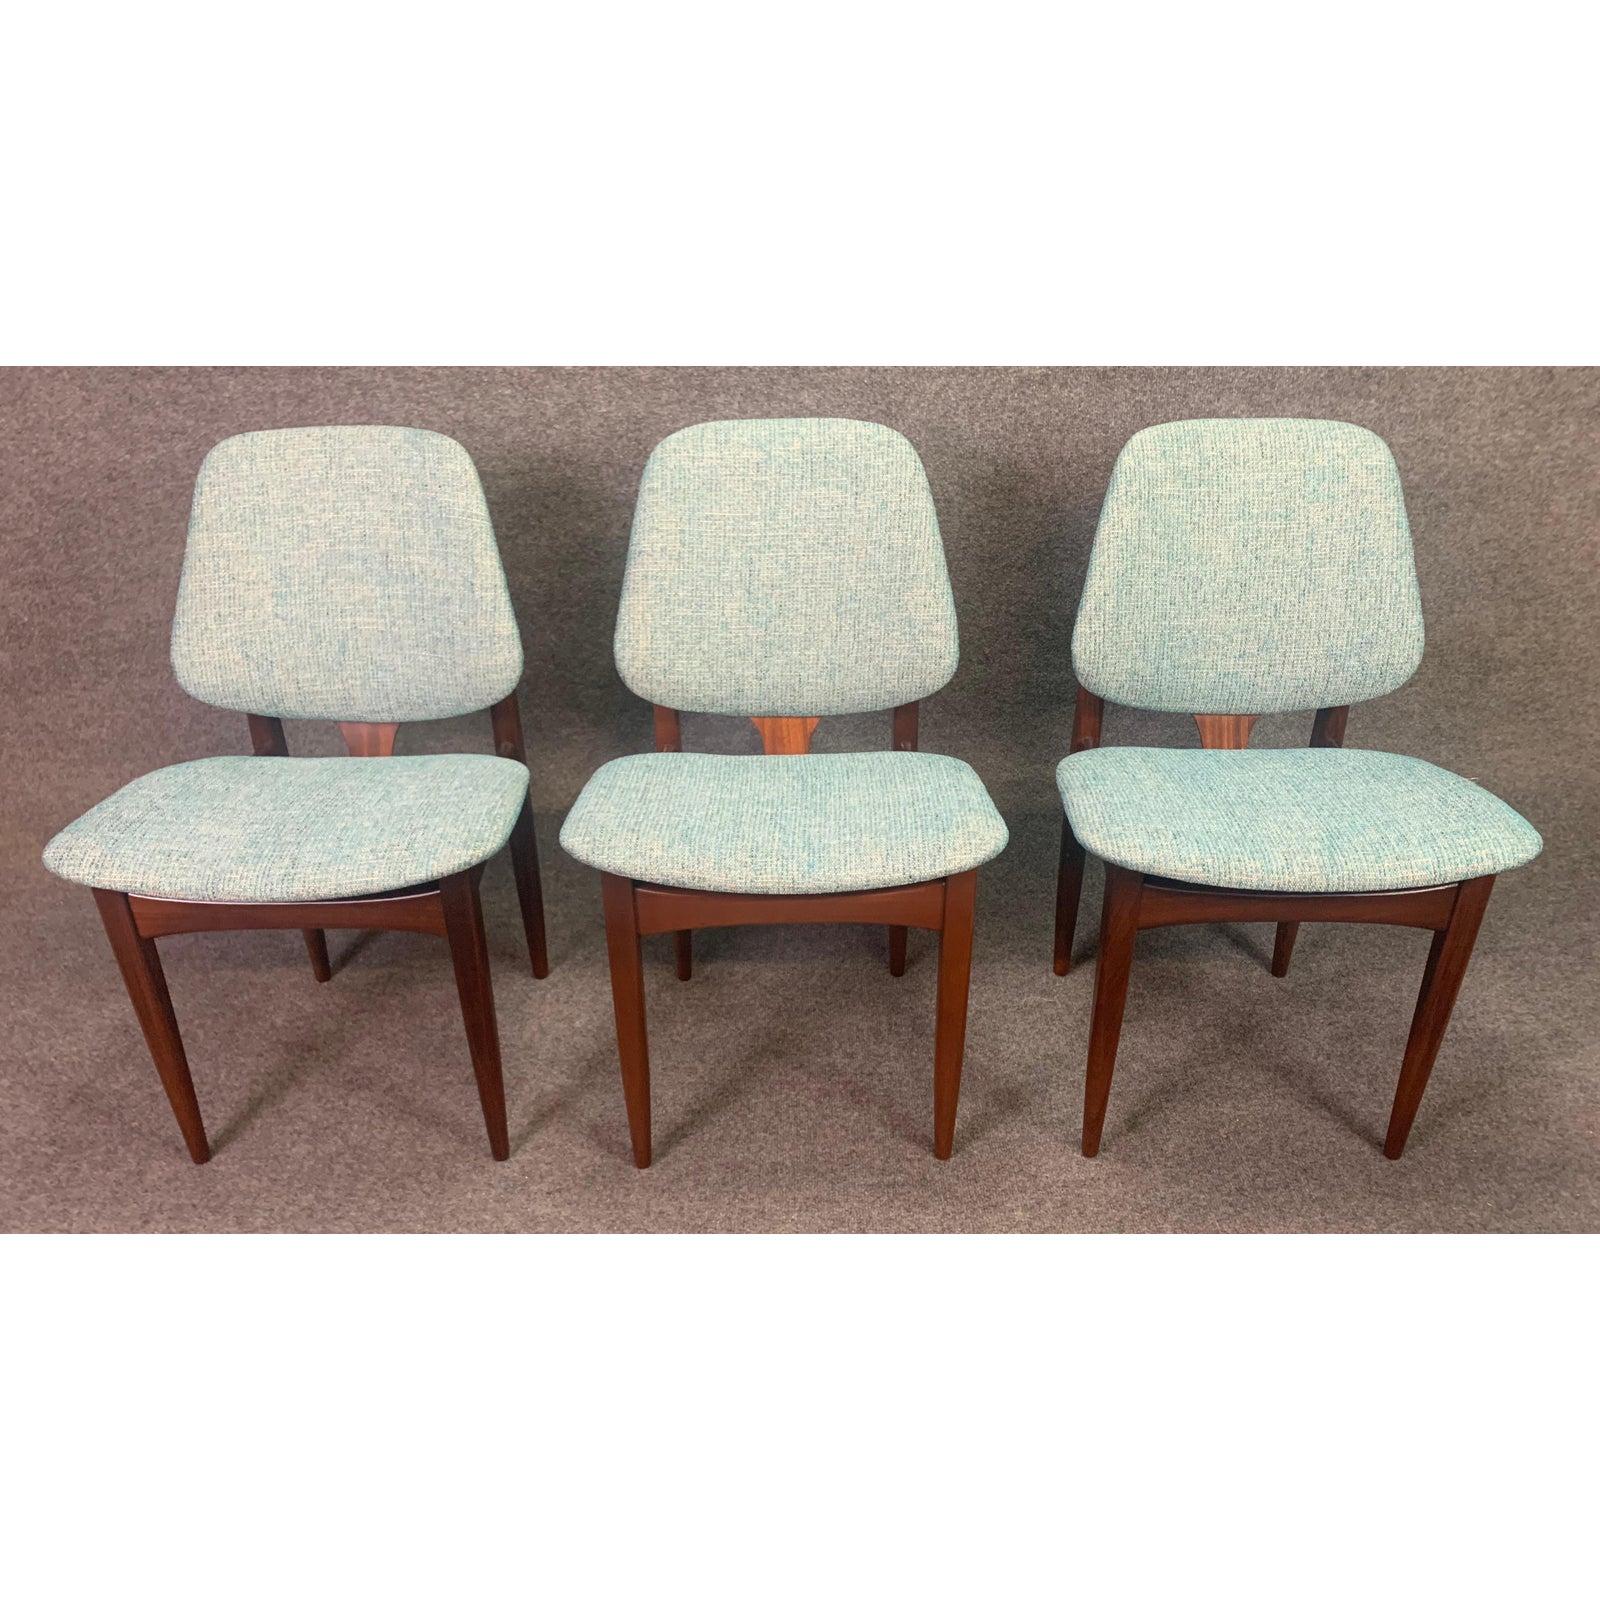 Woodwork Vintage British Mid-Century Modern Teak Chairs by Elliotts of Newbury, Set of 6